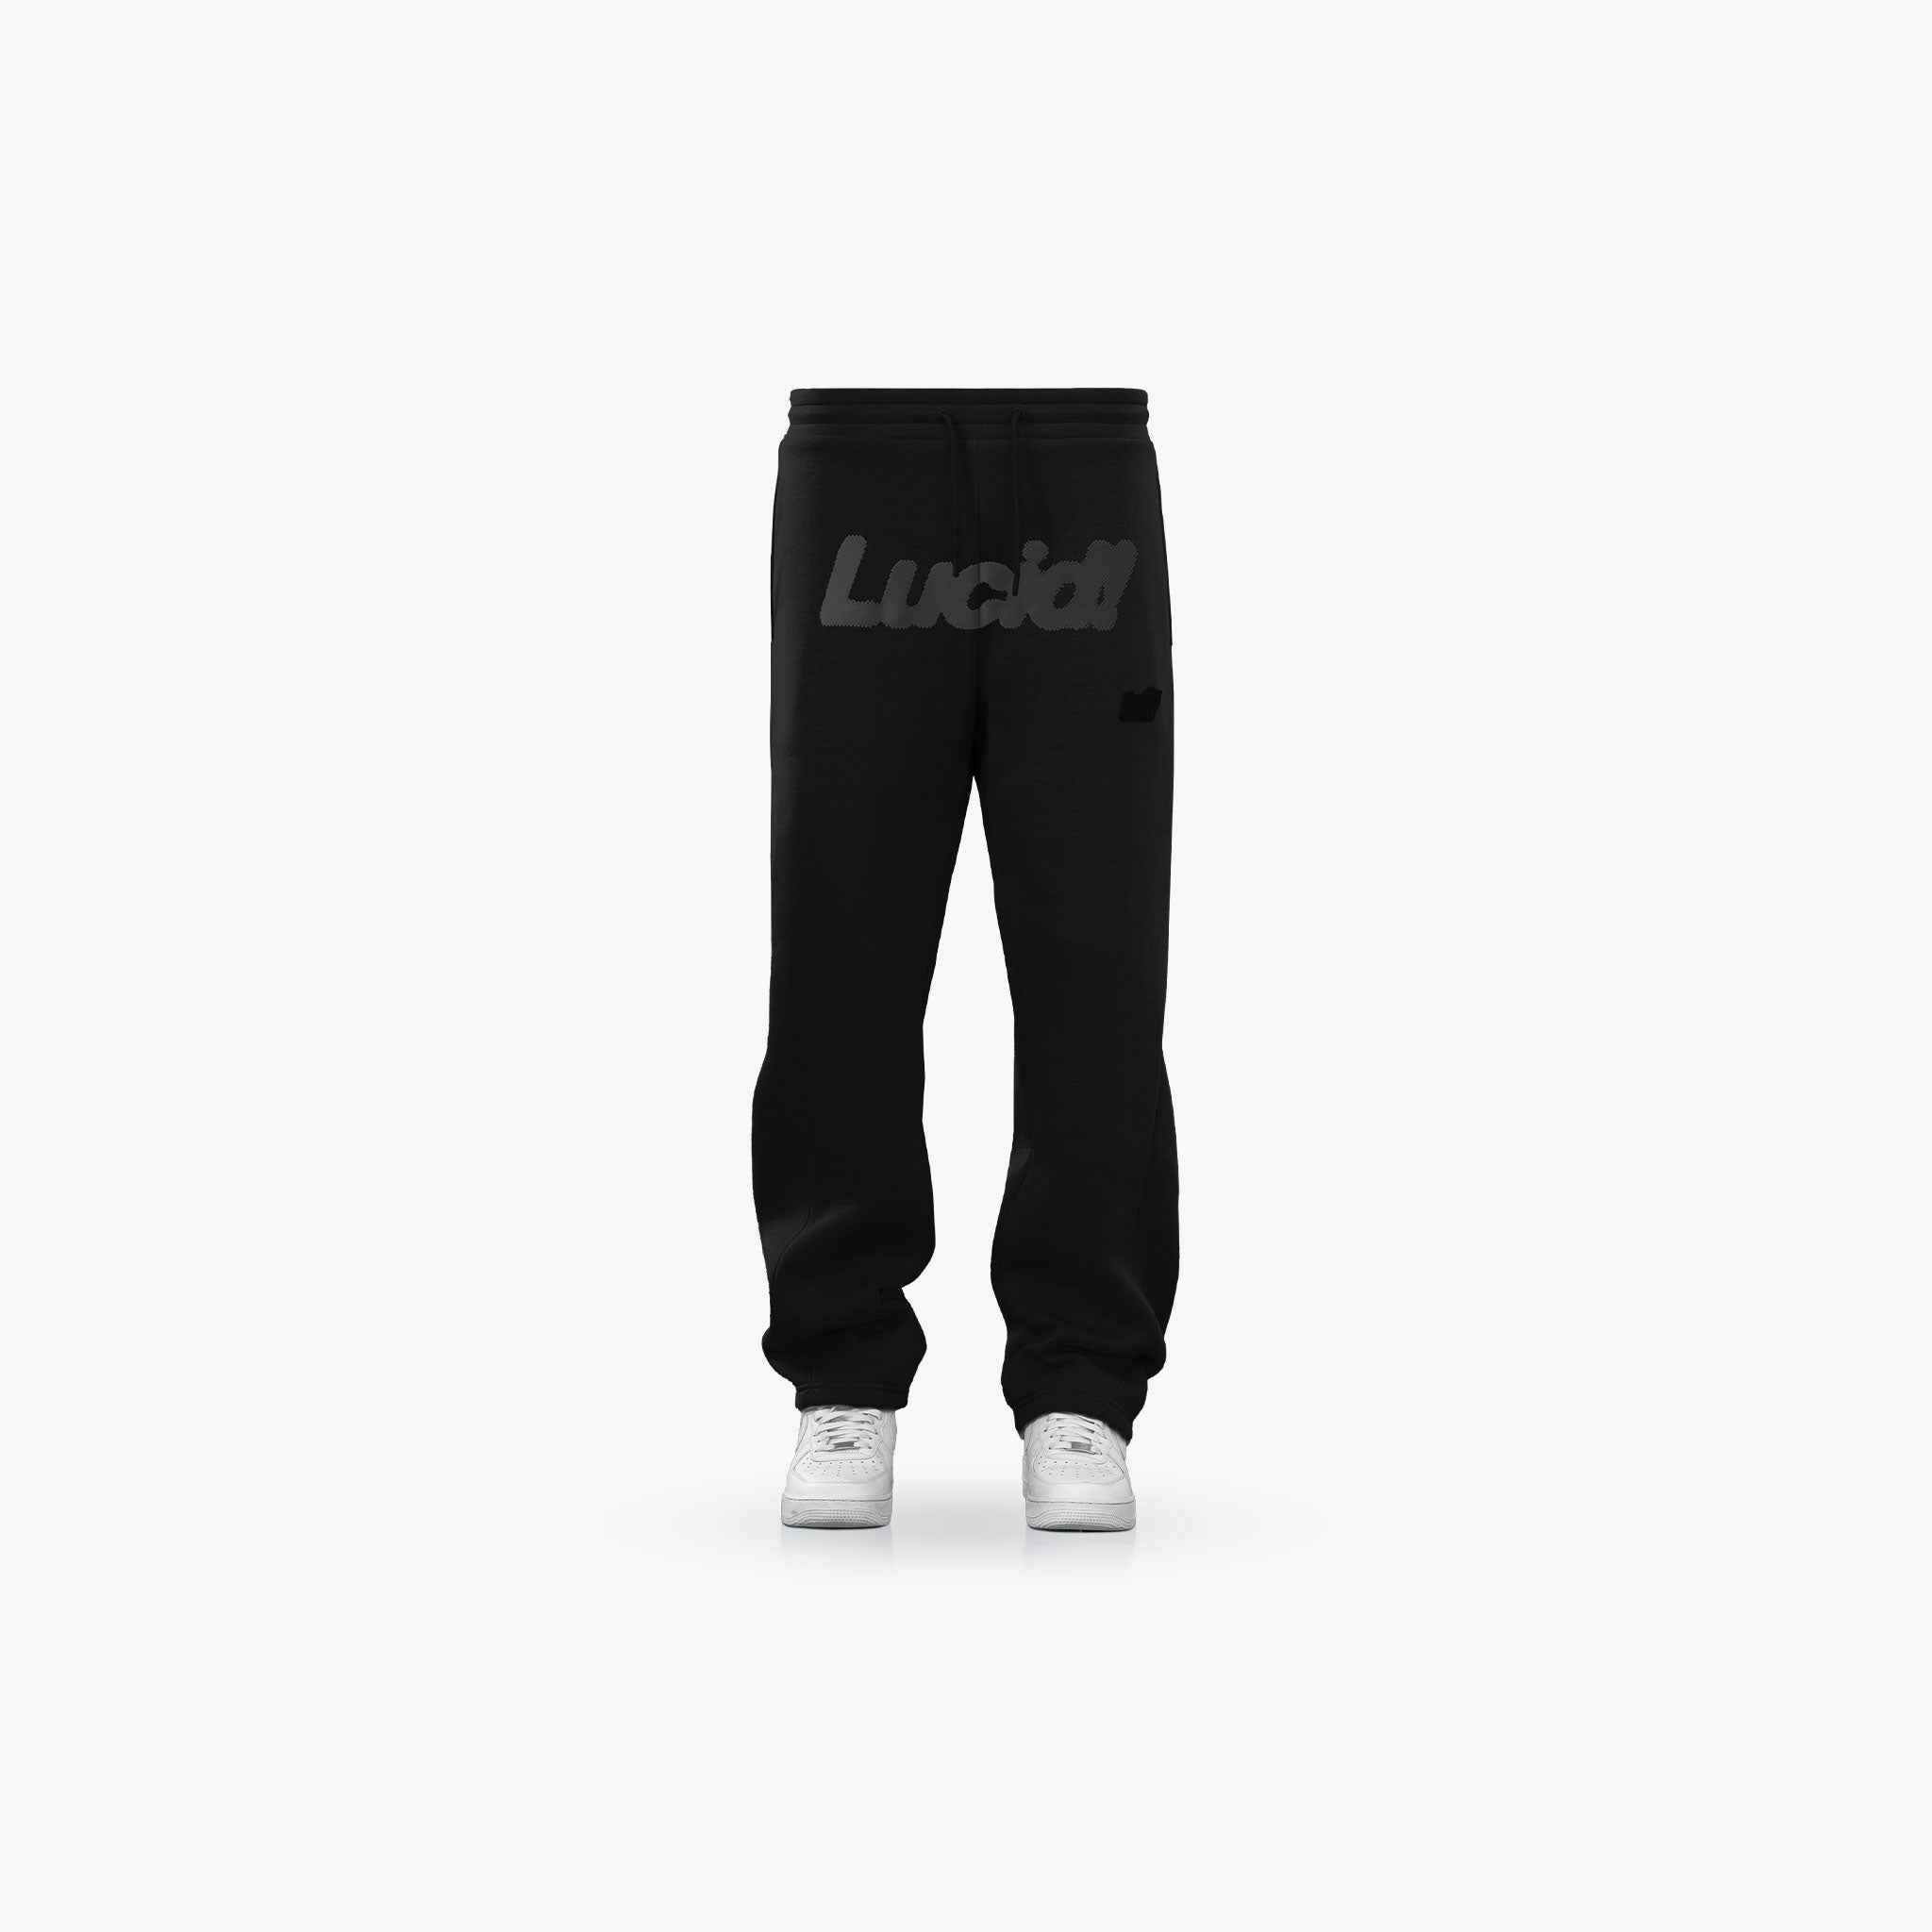 Lucid! Sweatpants Black/Black - Lucid Club